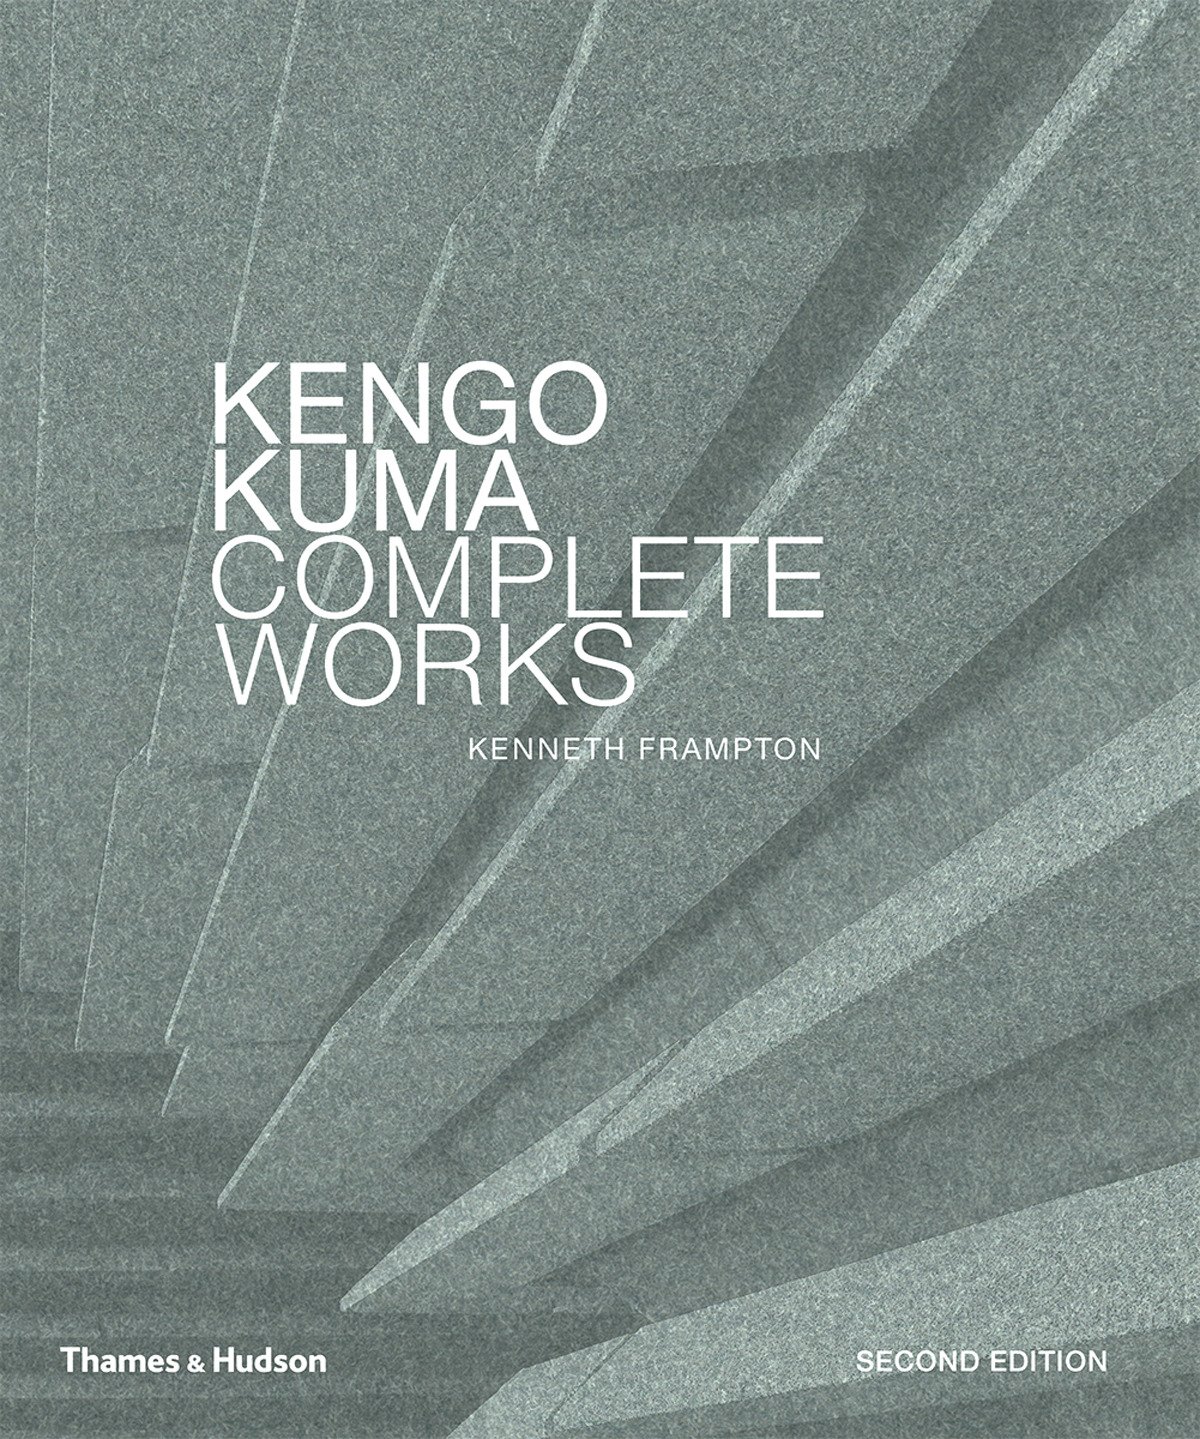 Kengo Kuma | Professor Kenneth Frampton